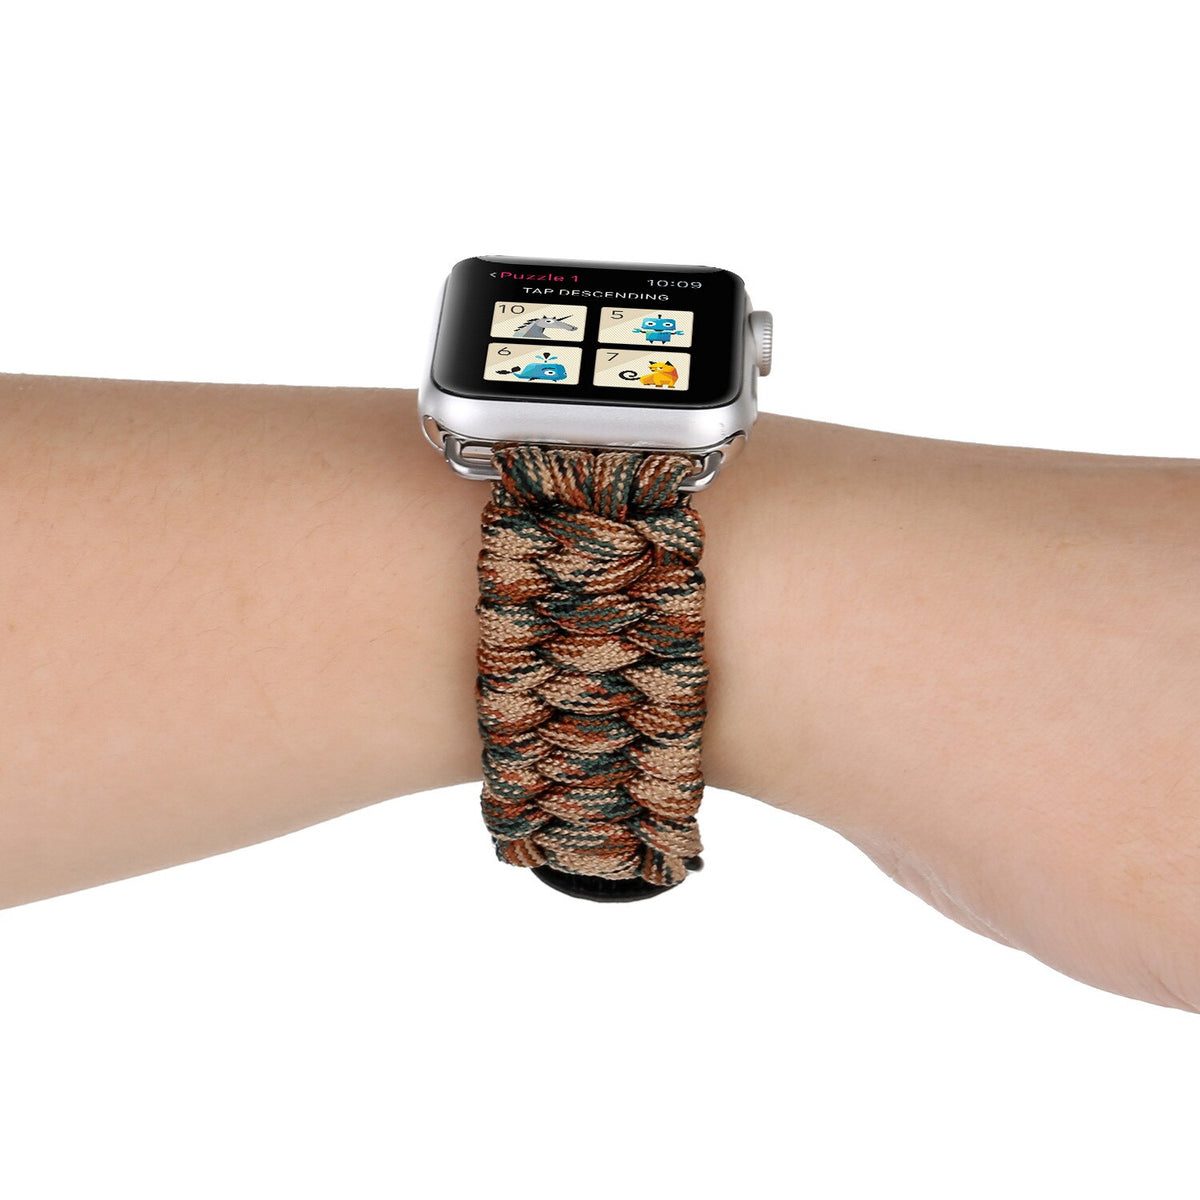 Survival Apple Watch Strap